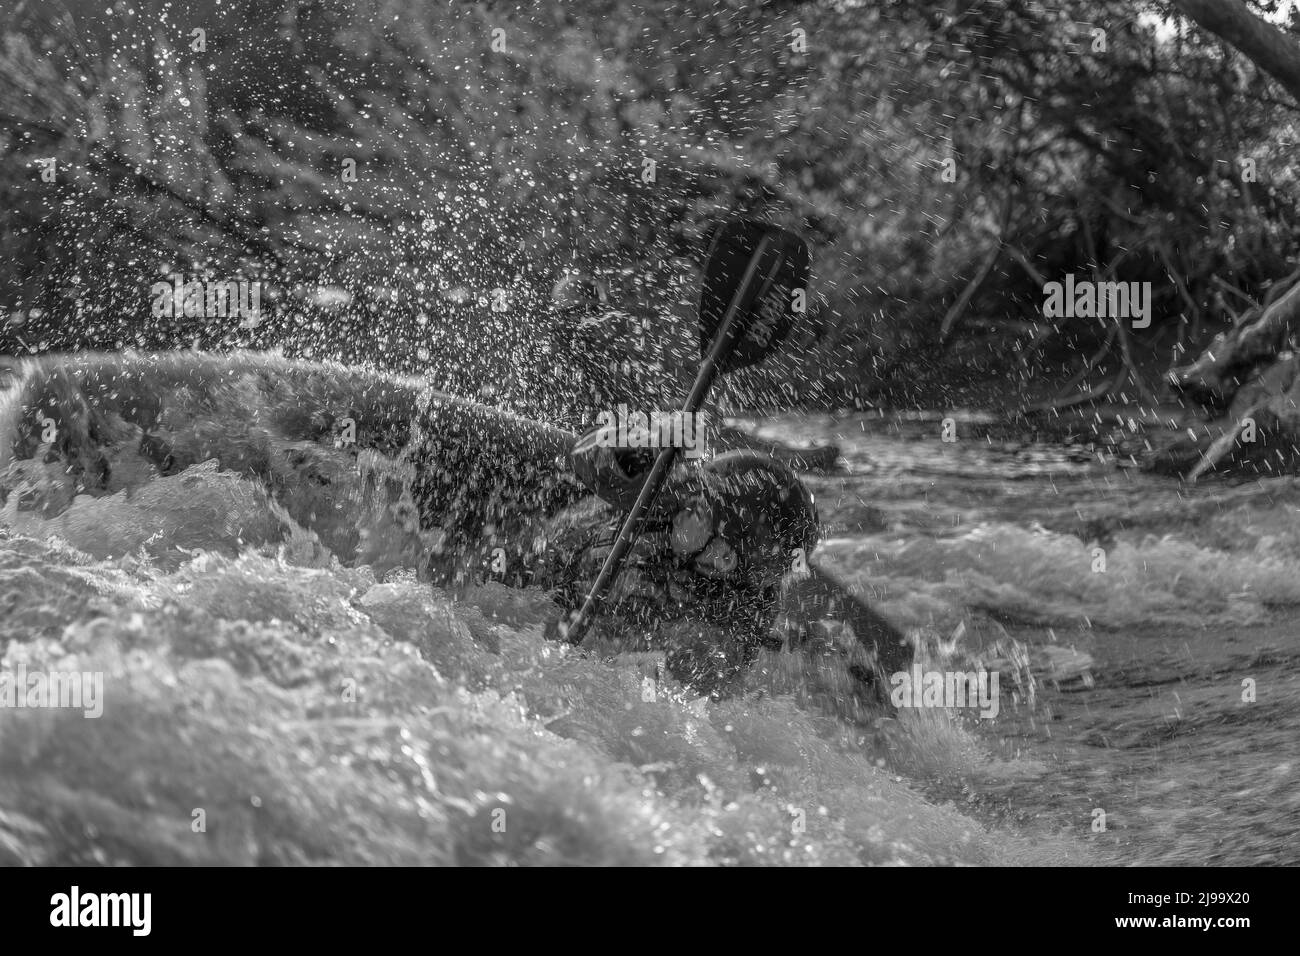 Wildwasser Extreme Kajakfahren Stockfoto